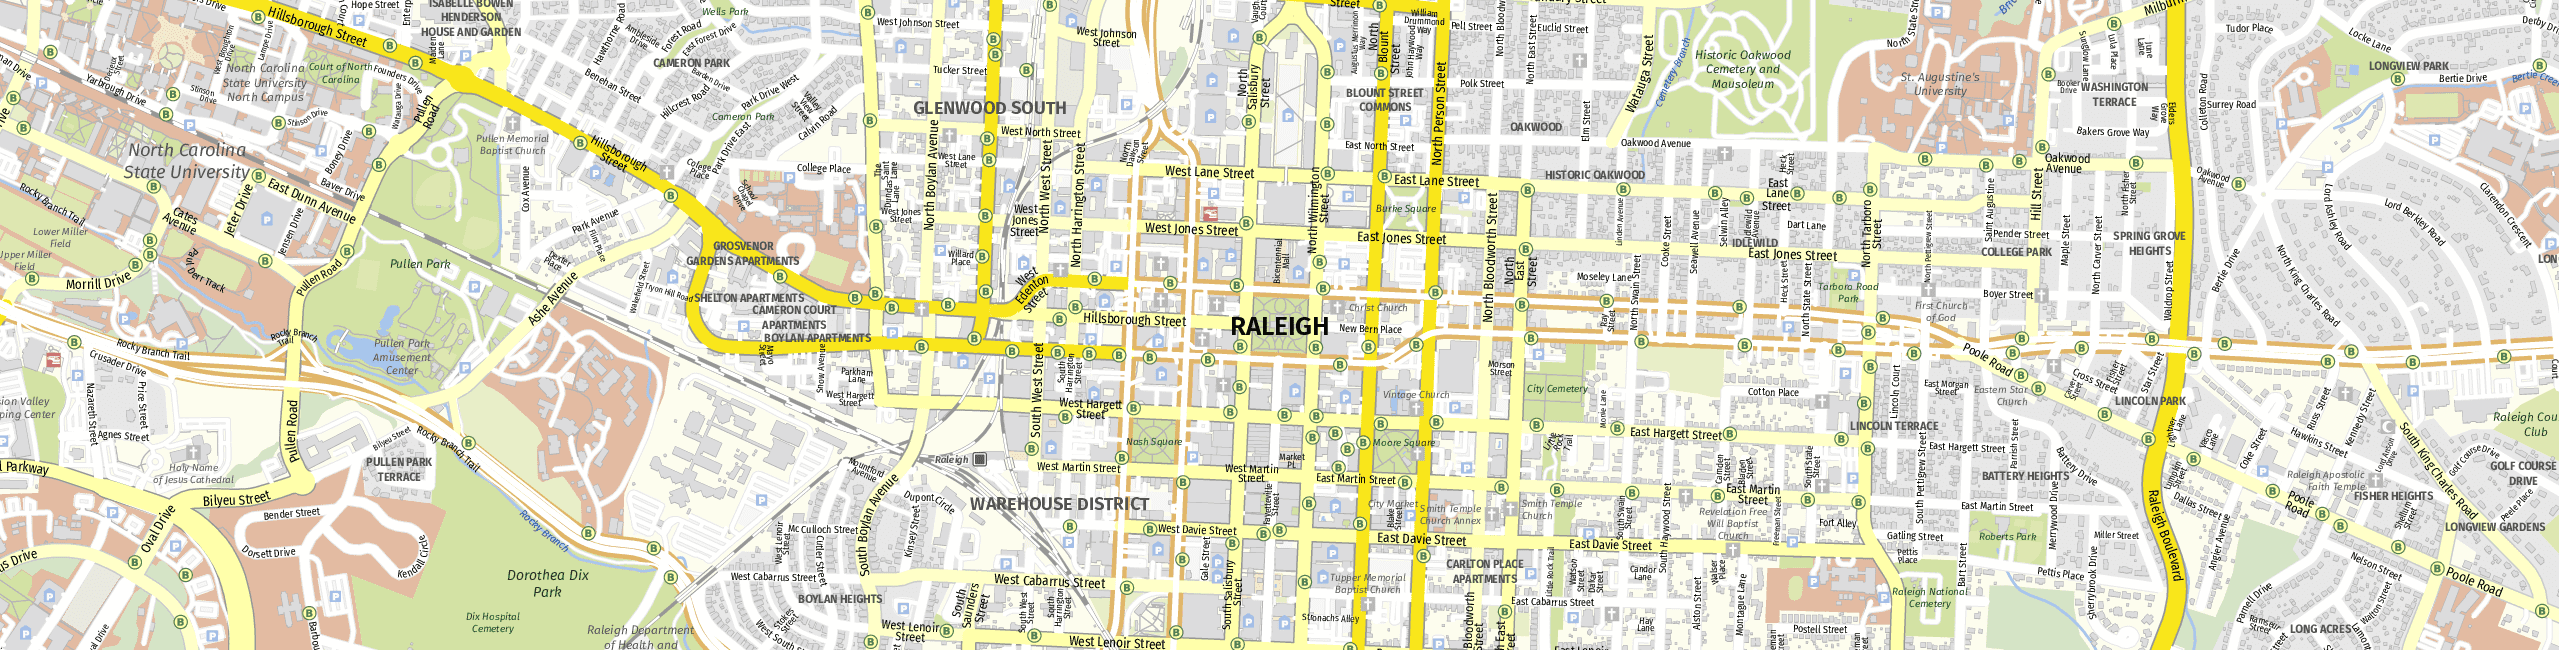 Stadtplan Raleigh zum Downloaden.